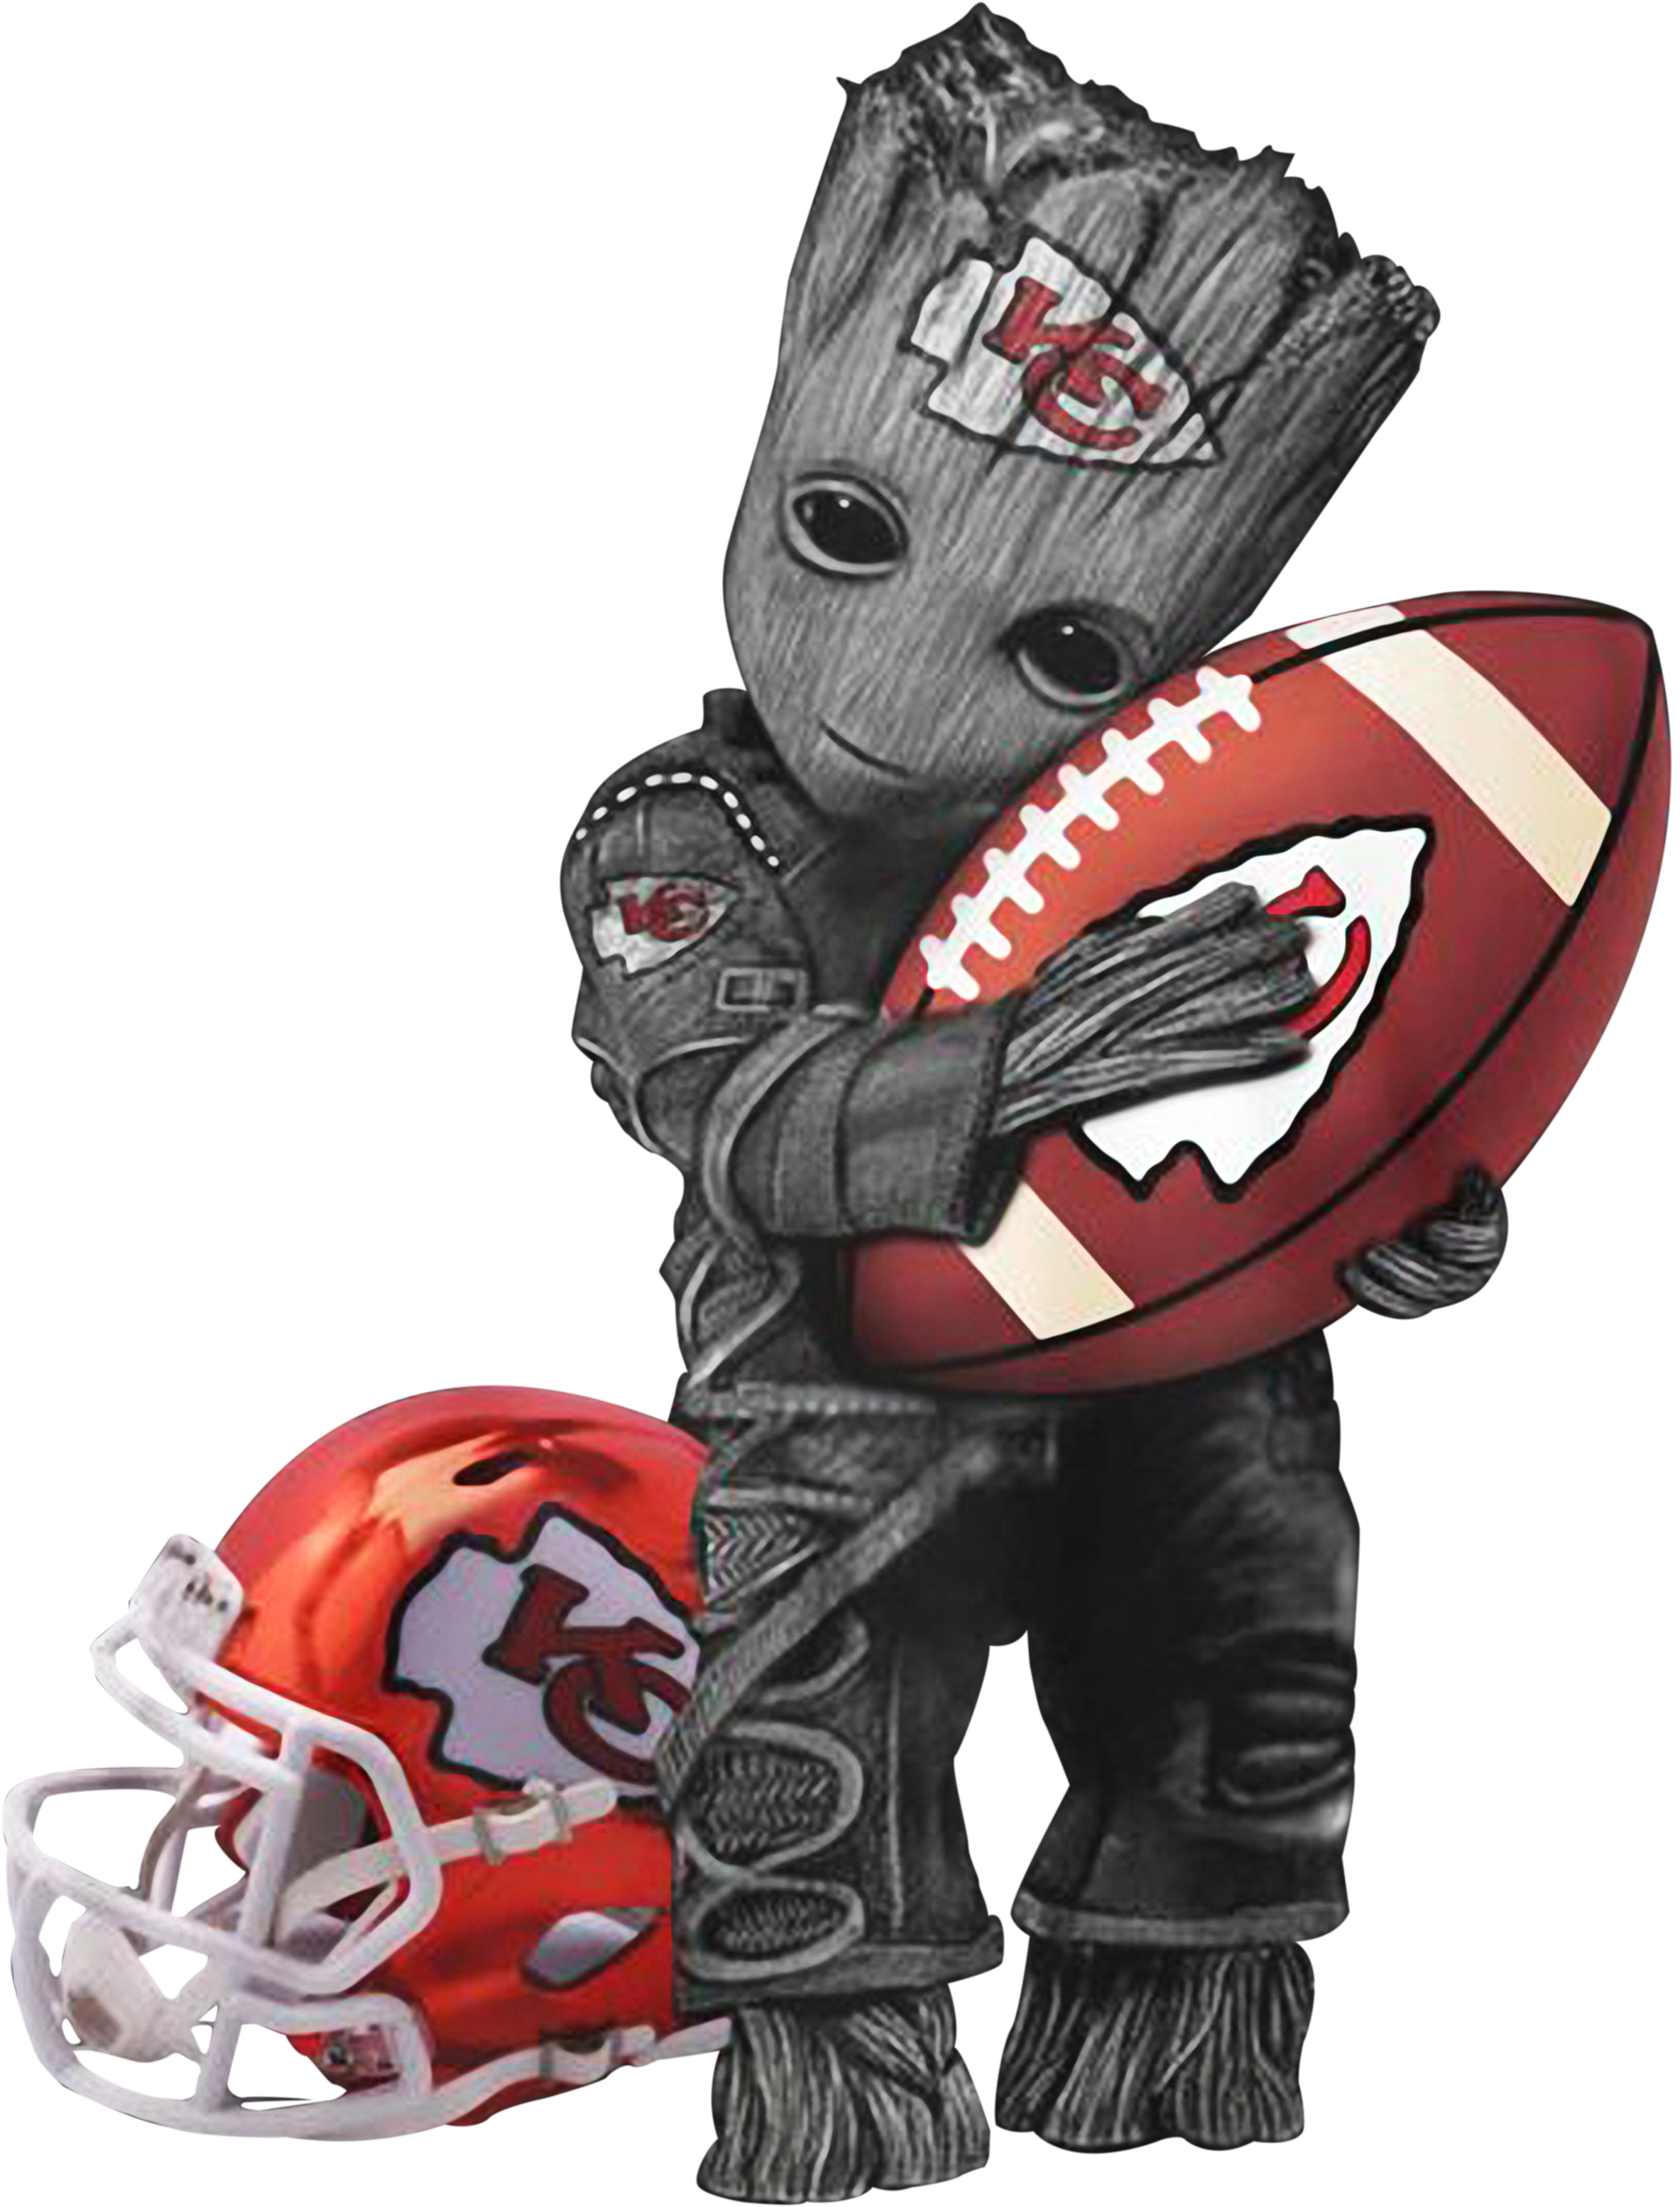 A Cartoon Character Holding A Football And Helmet